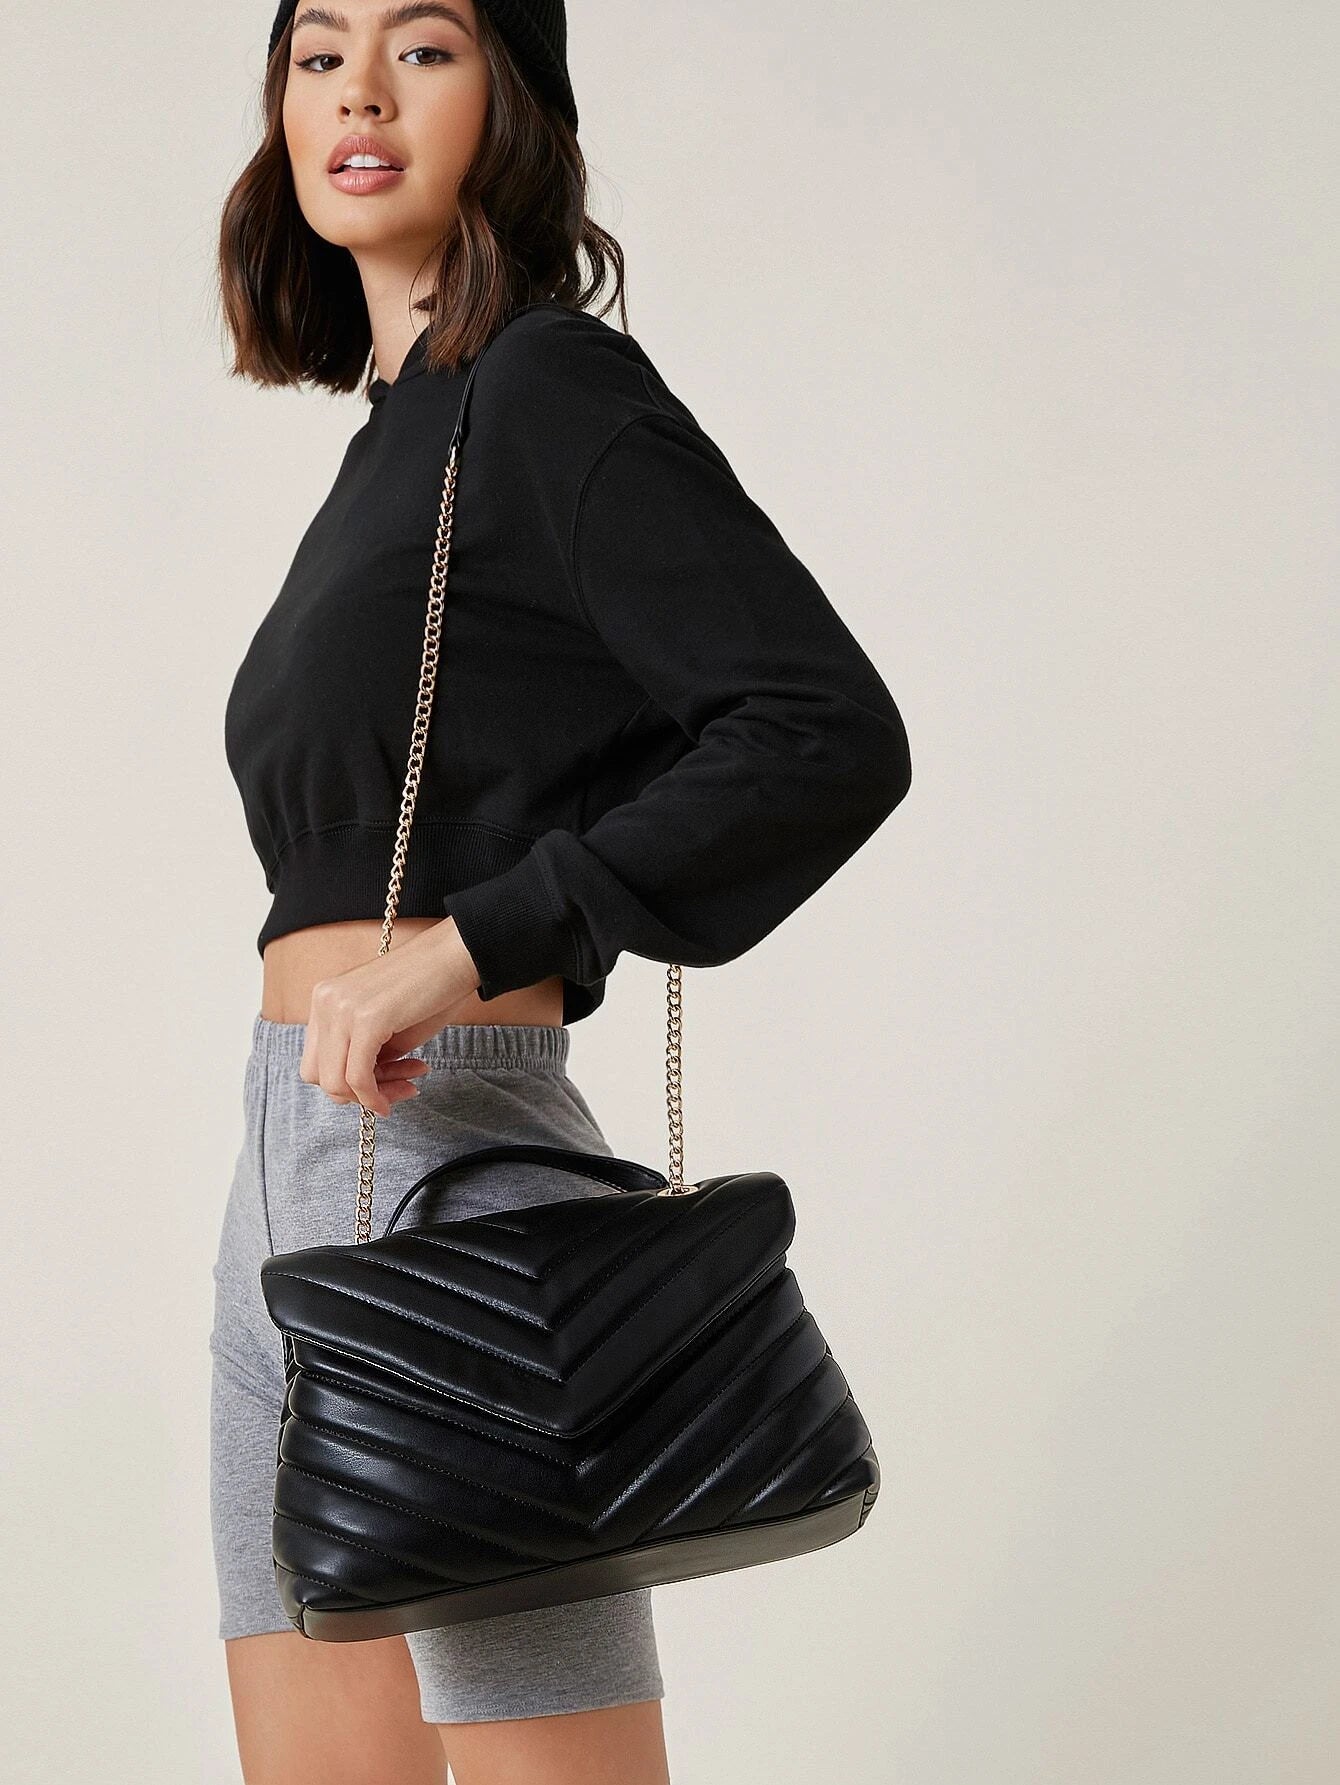 SHEIN BIZwear Chevron Chain Shoulder Bag